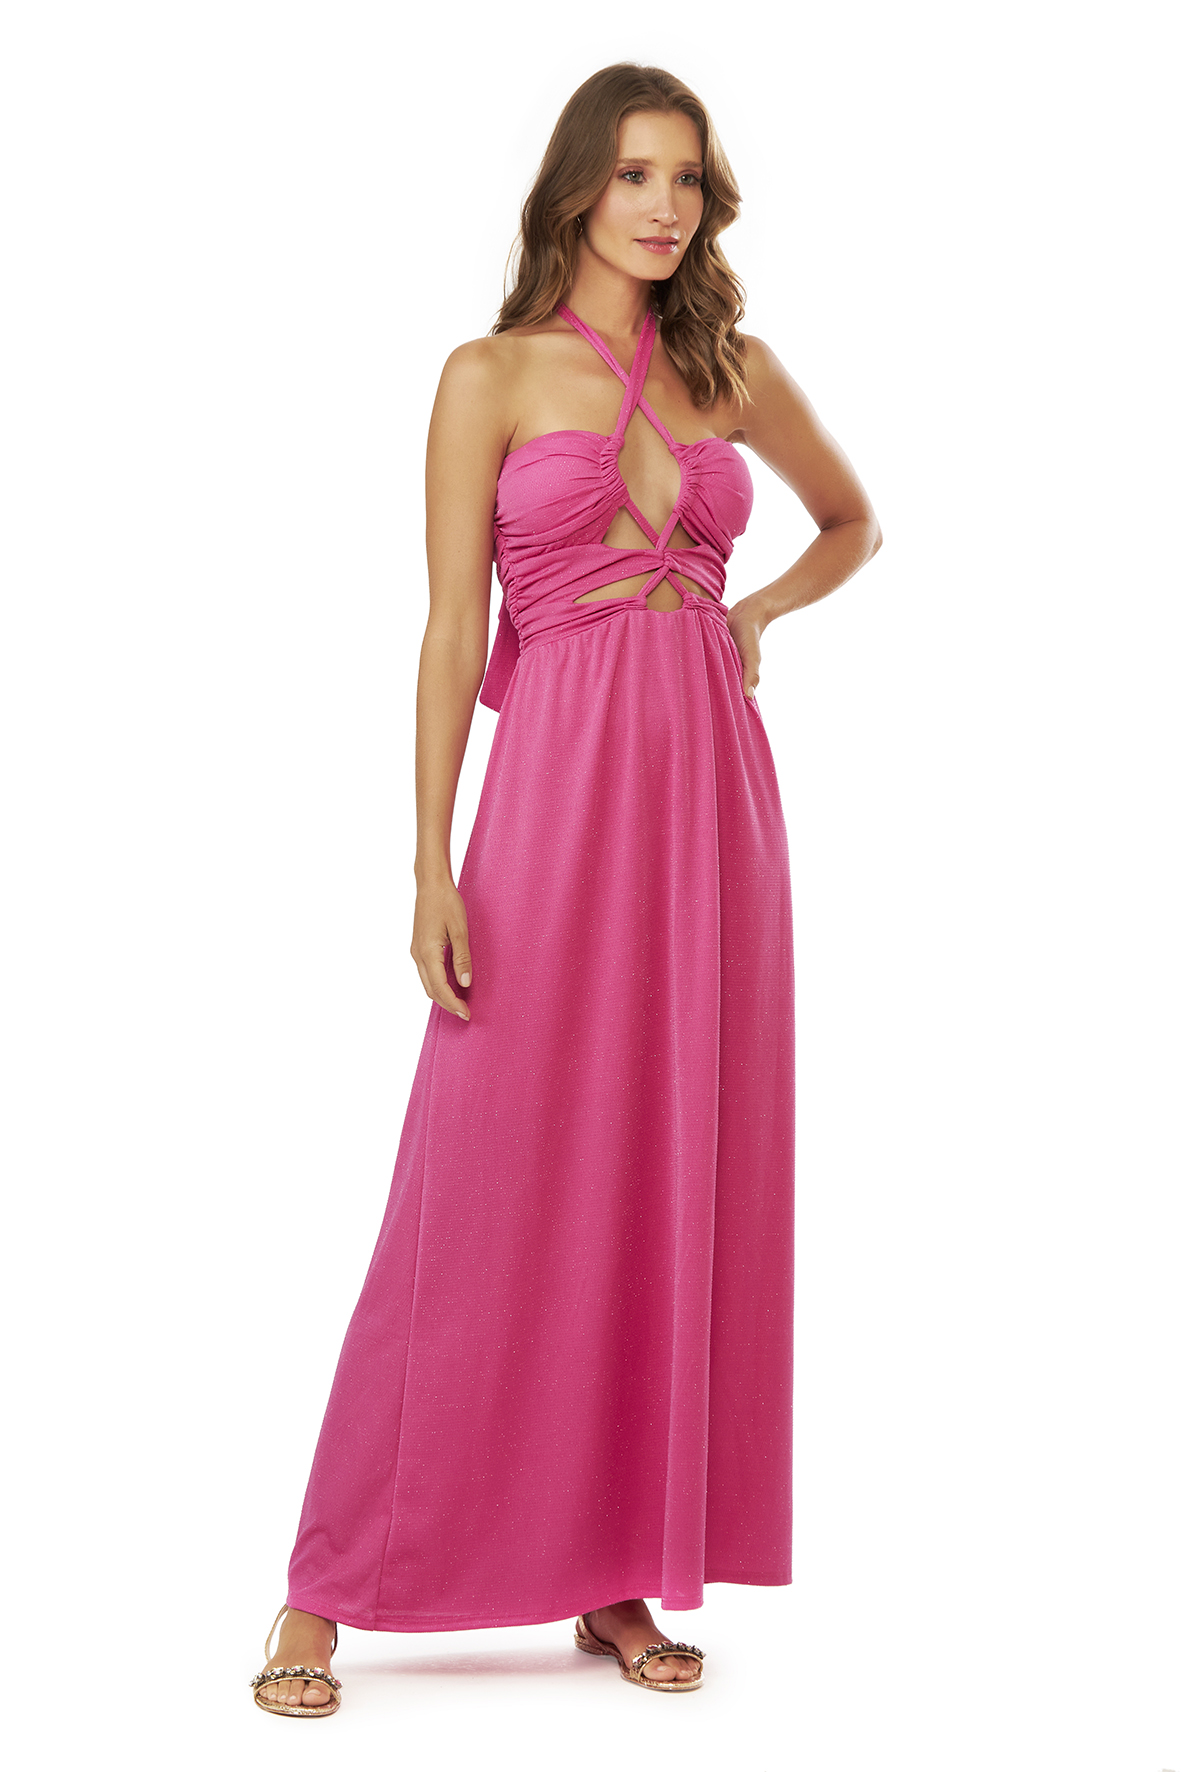 Tee Match - vestido longo decote vazado shine pink